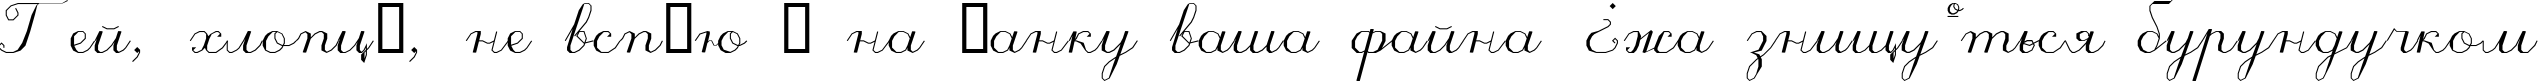 Пример написания шрифтом ScriptC текста на украинском